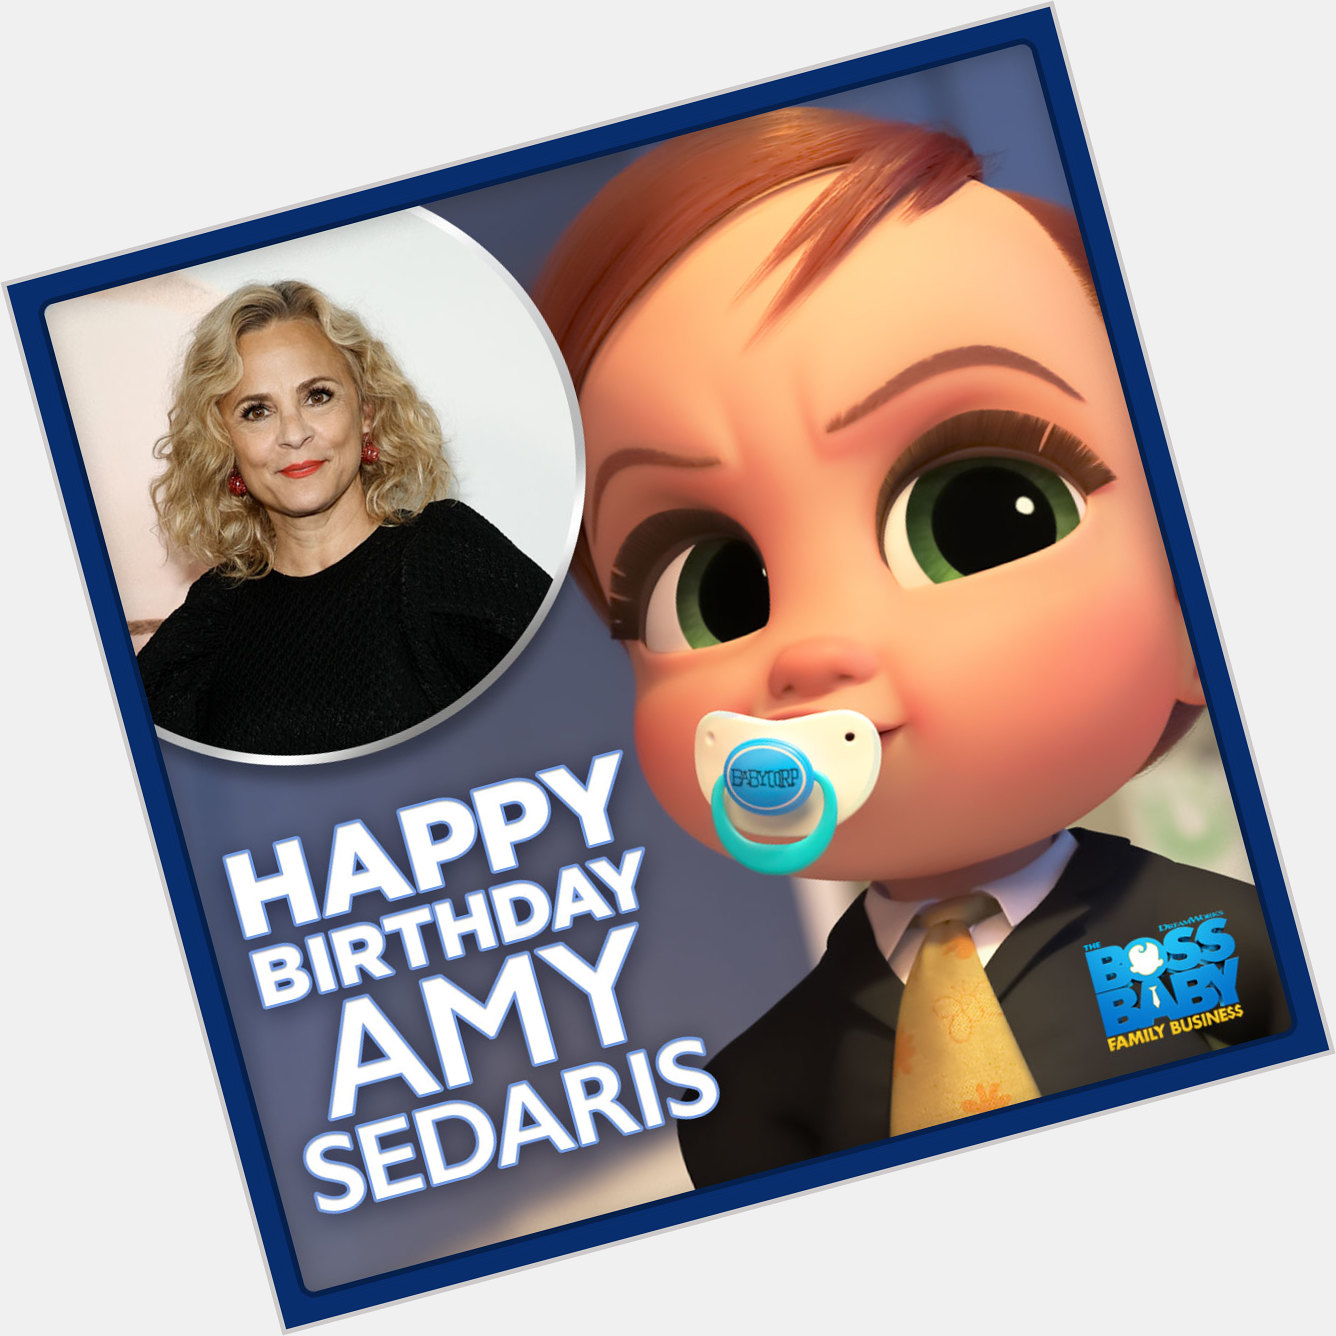 Happy birthday, Amy Sedaris! 